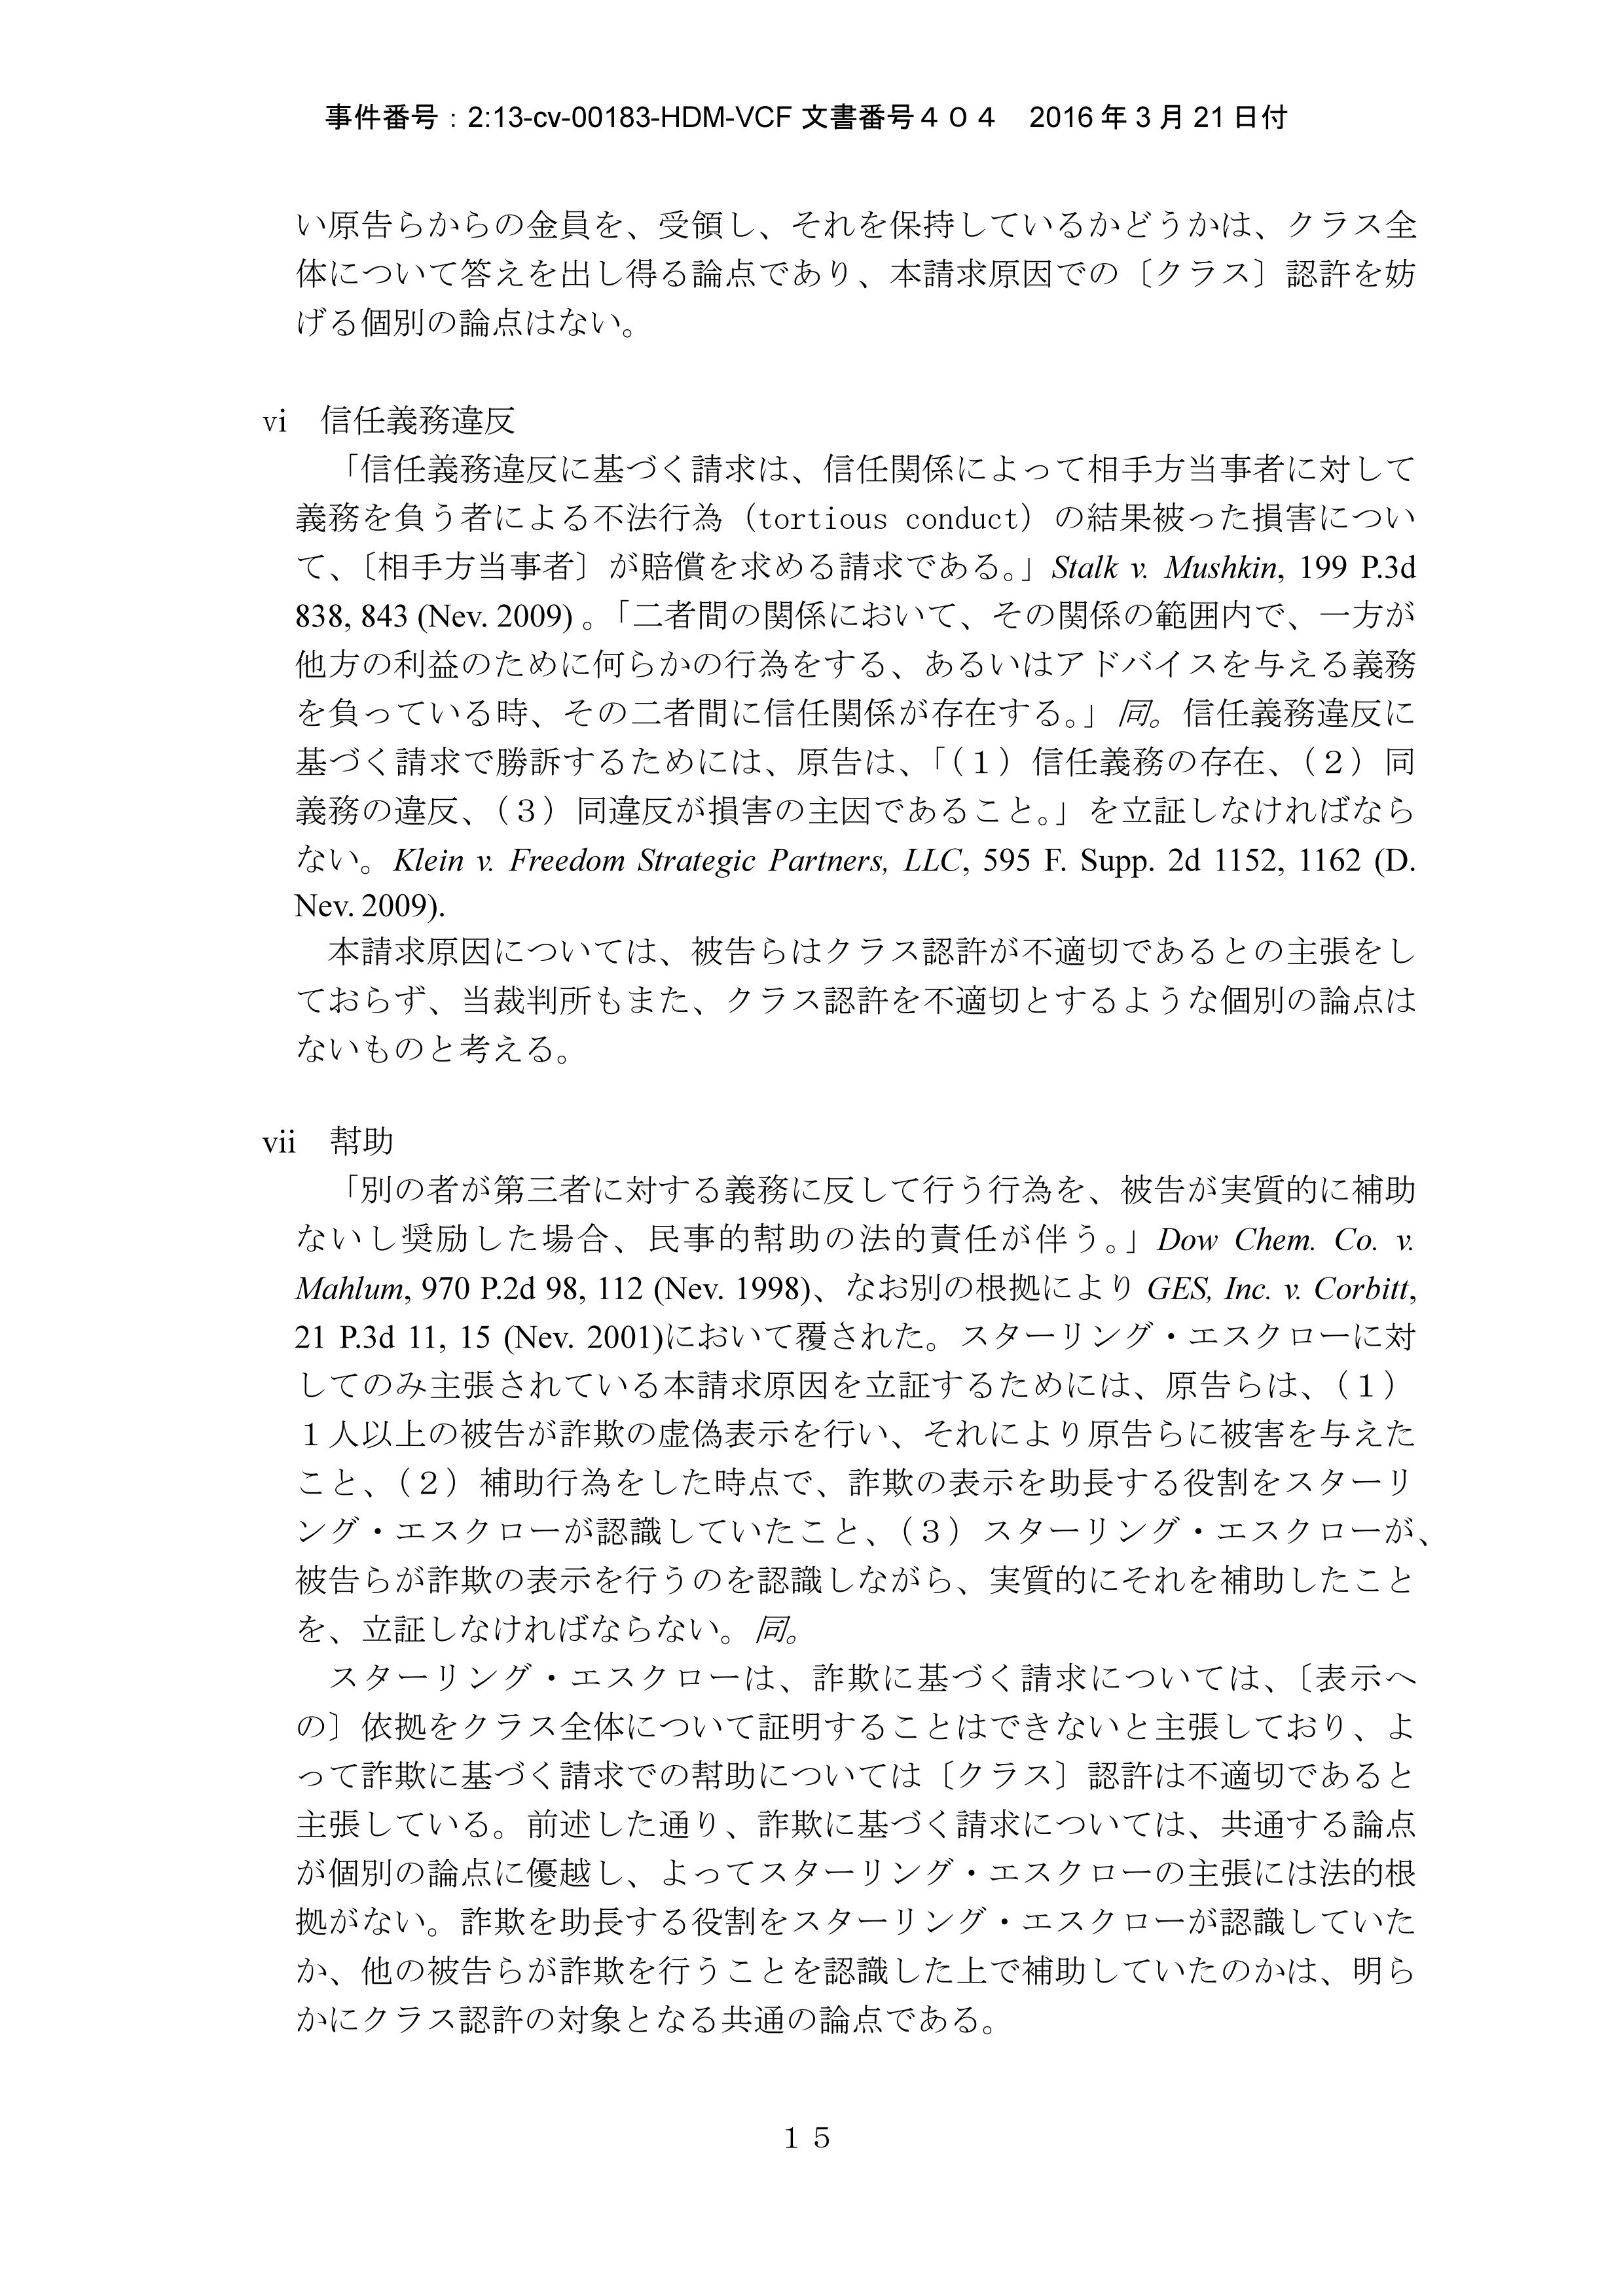 CA_Dkt 404_Order Granting Class Certification_Japanese translation_15